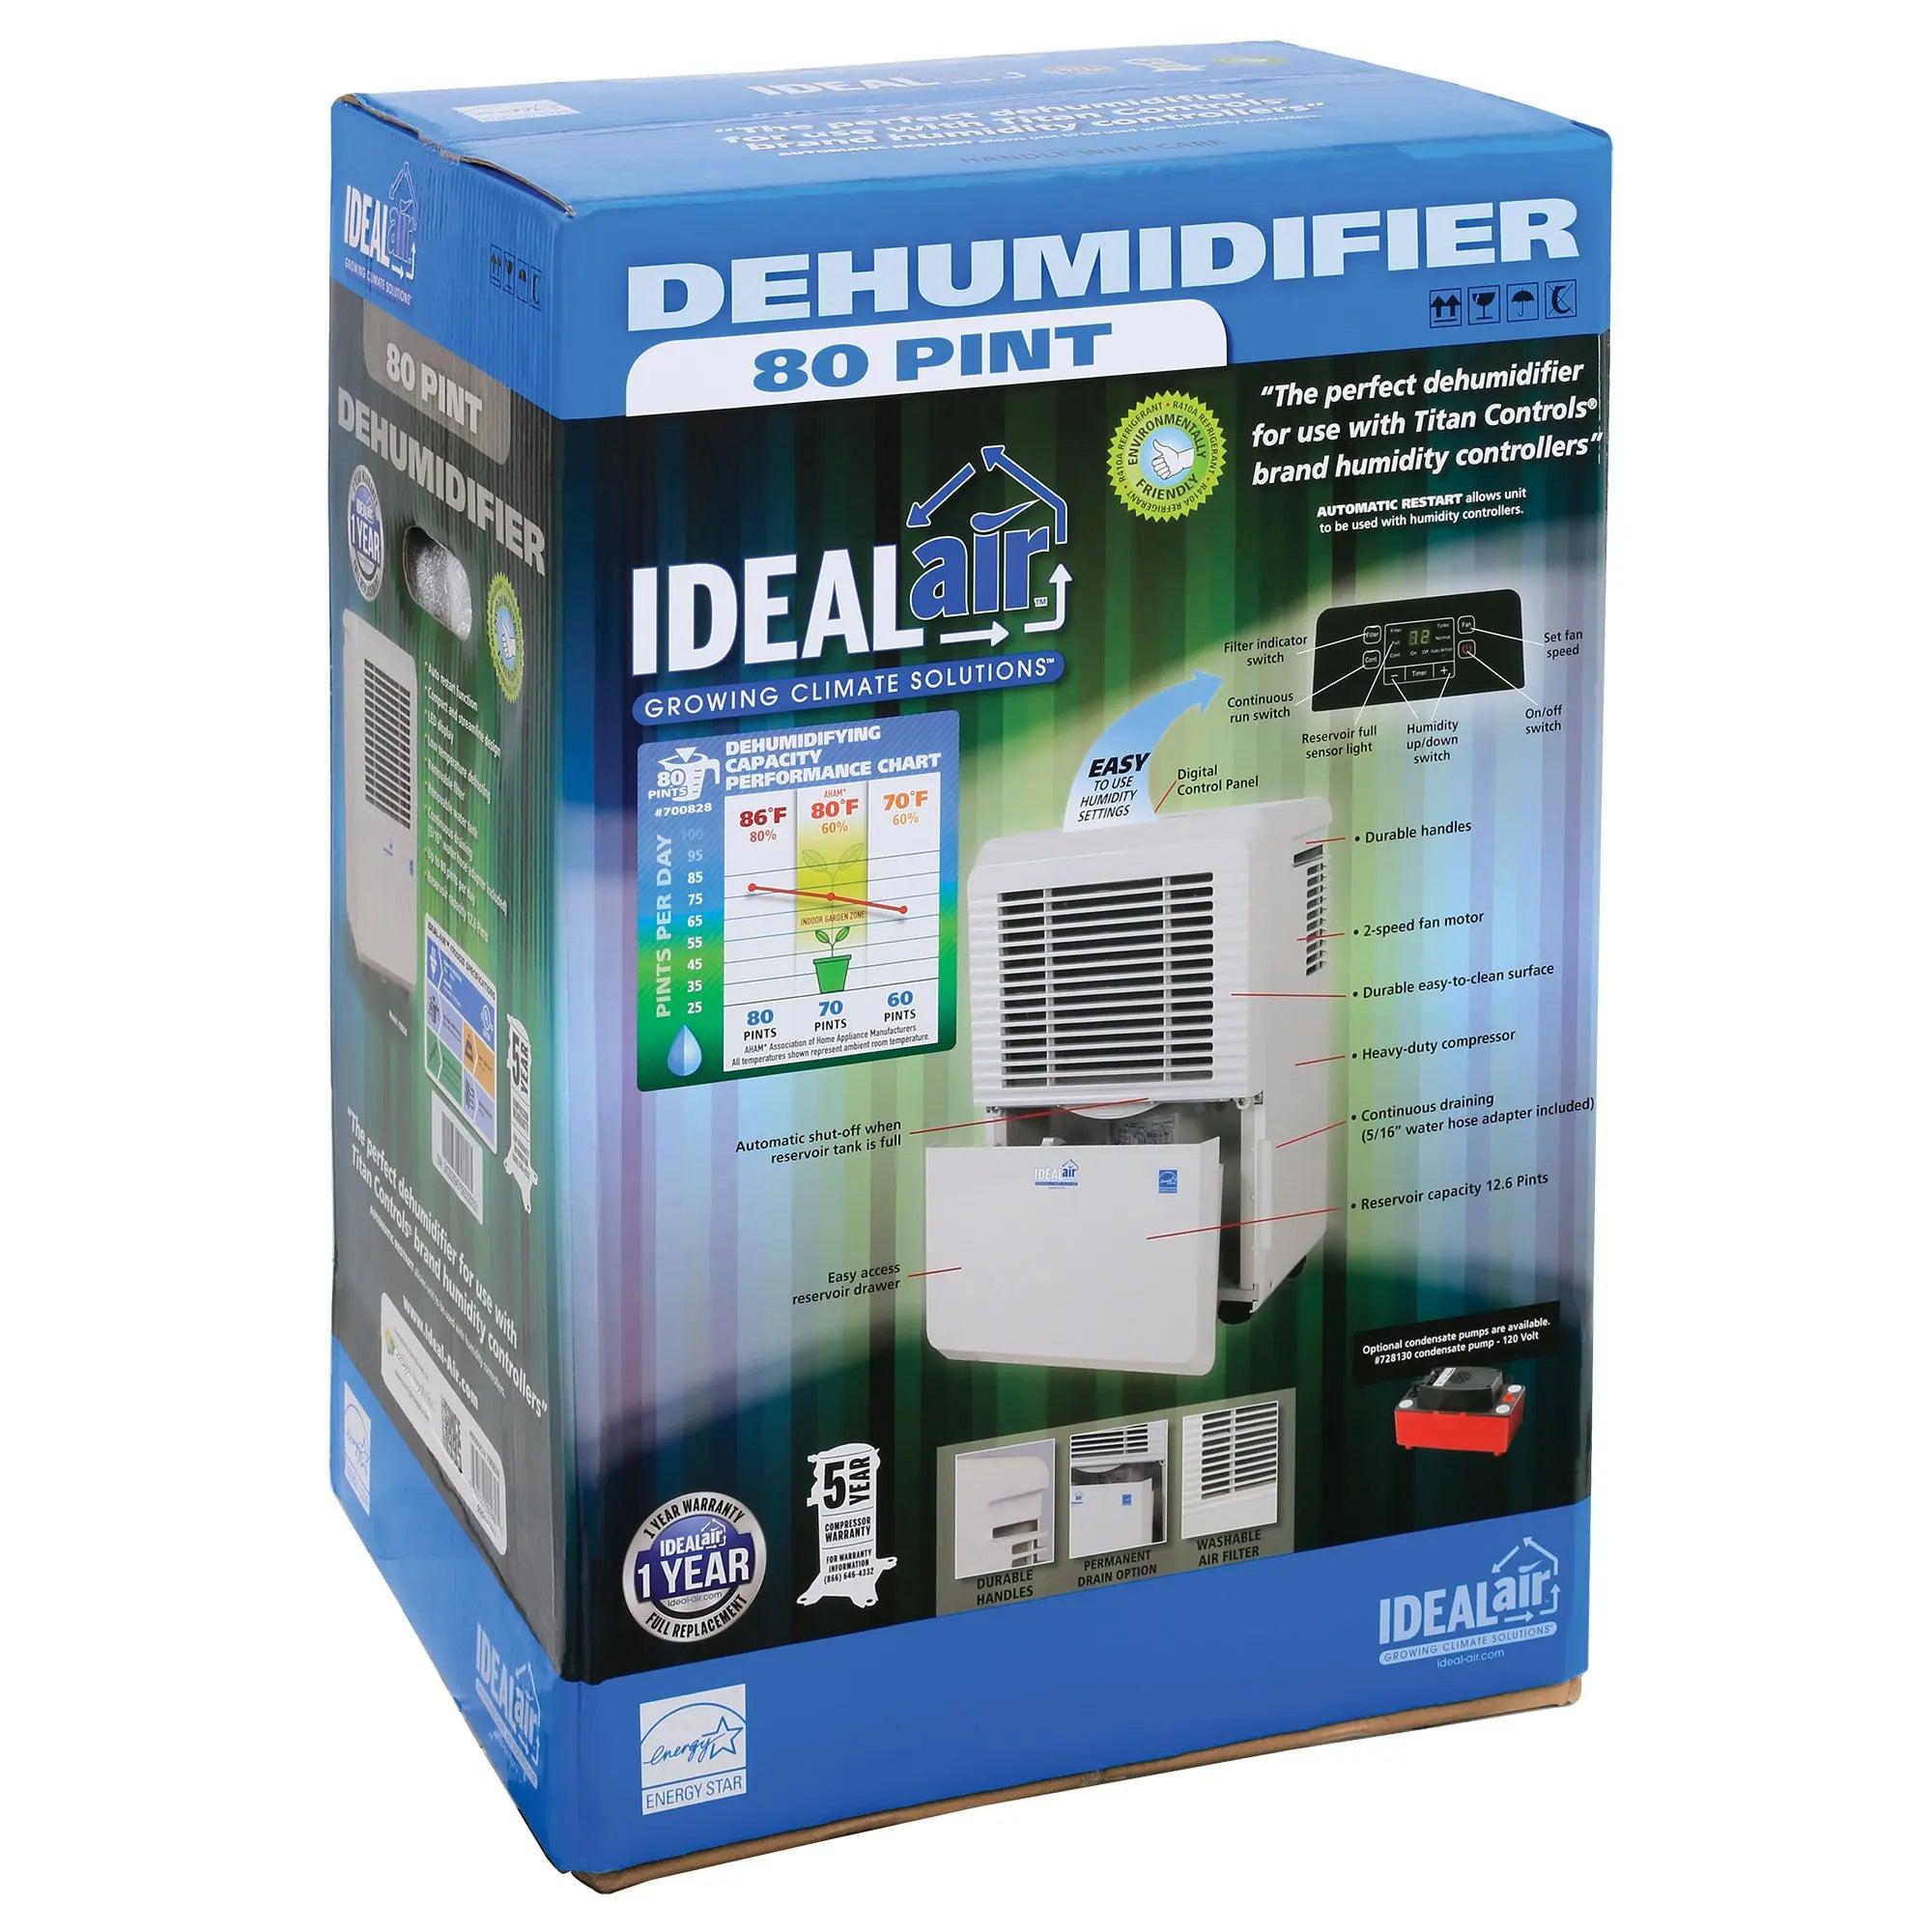 Ideal-Air Dehumidifier, 50 Pint - Up to 80 Pints per Day Ideal-Air